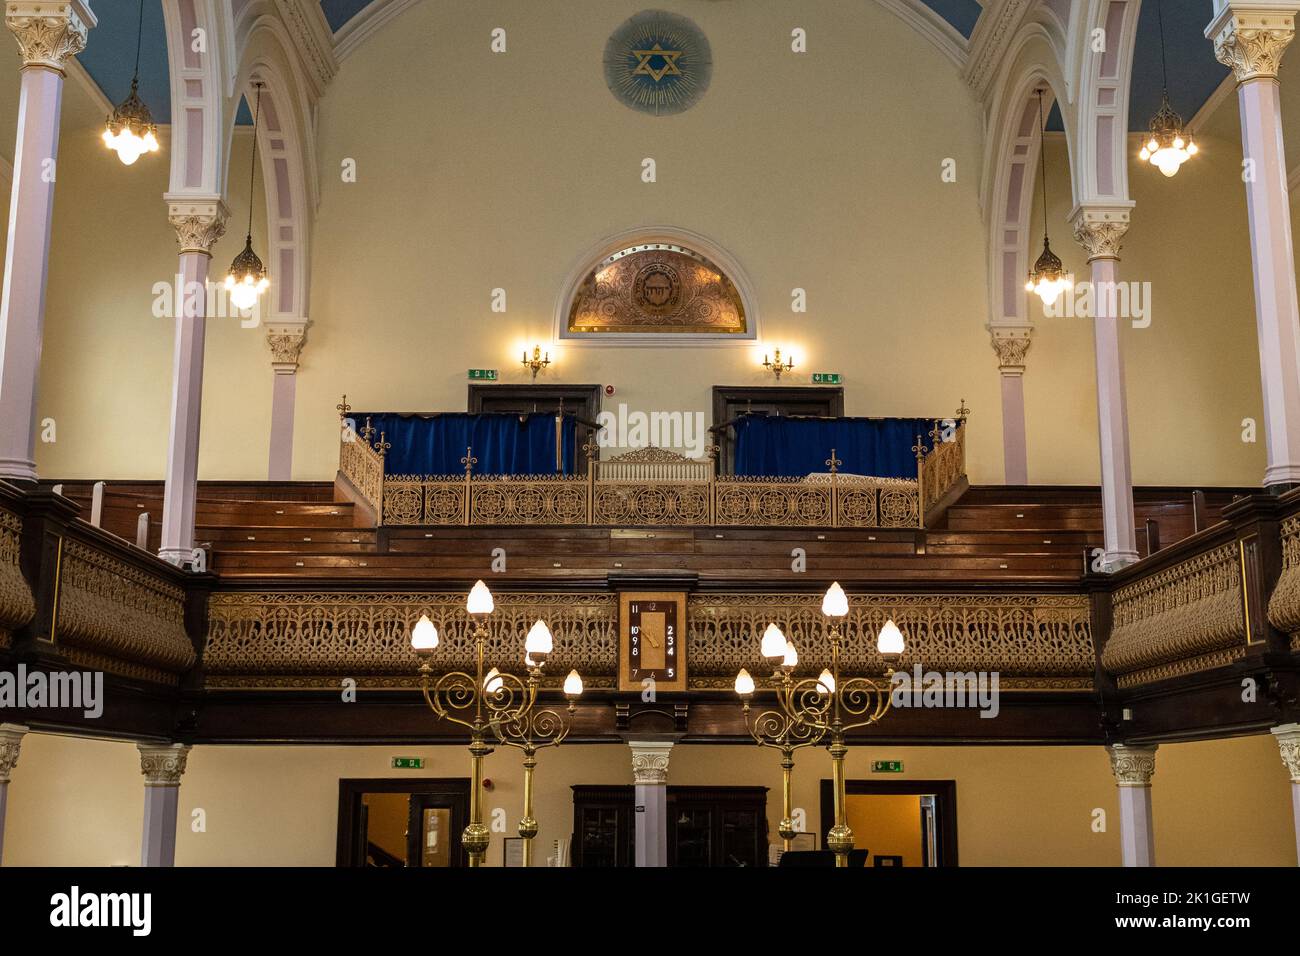 Garnethill Synagogue interior, Glasgow, Scotland, UK Stock Photo